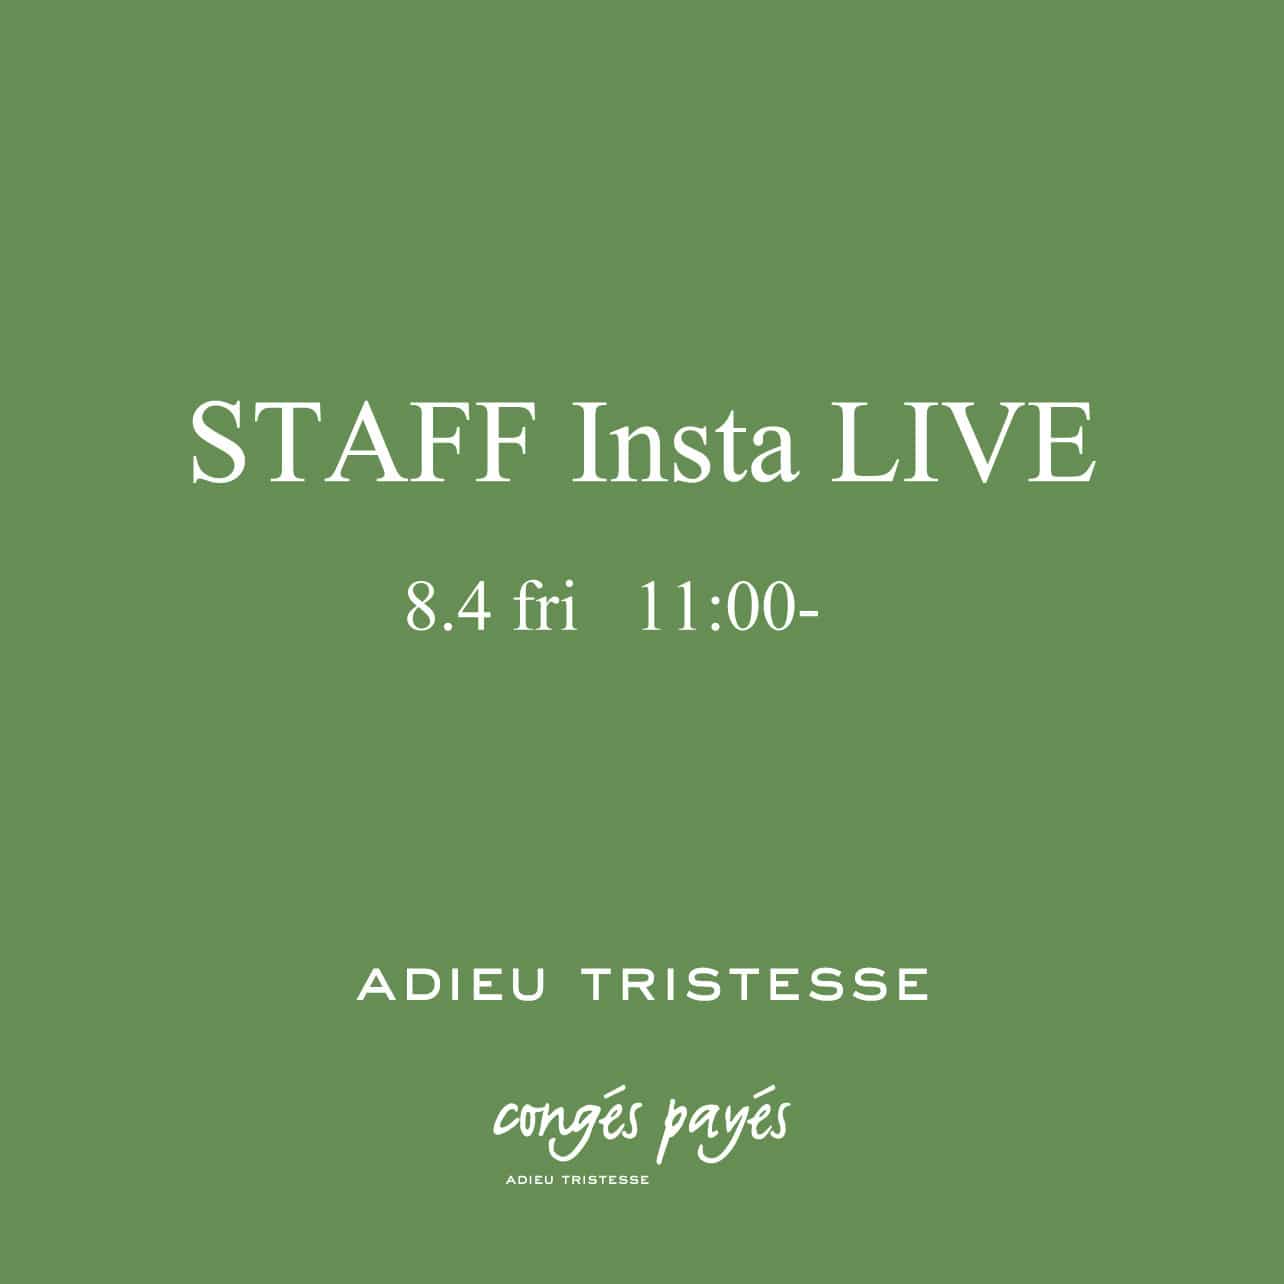 STAFF Insta Live